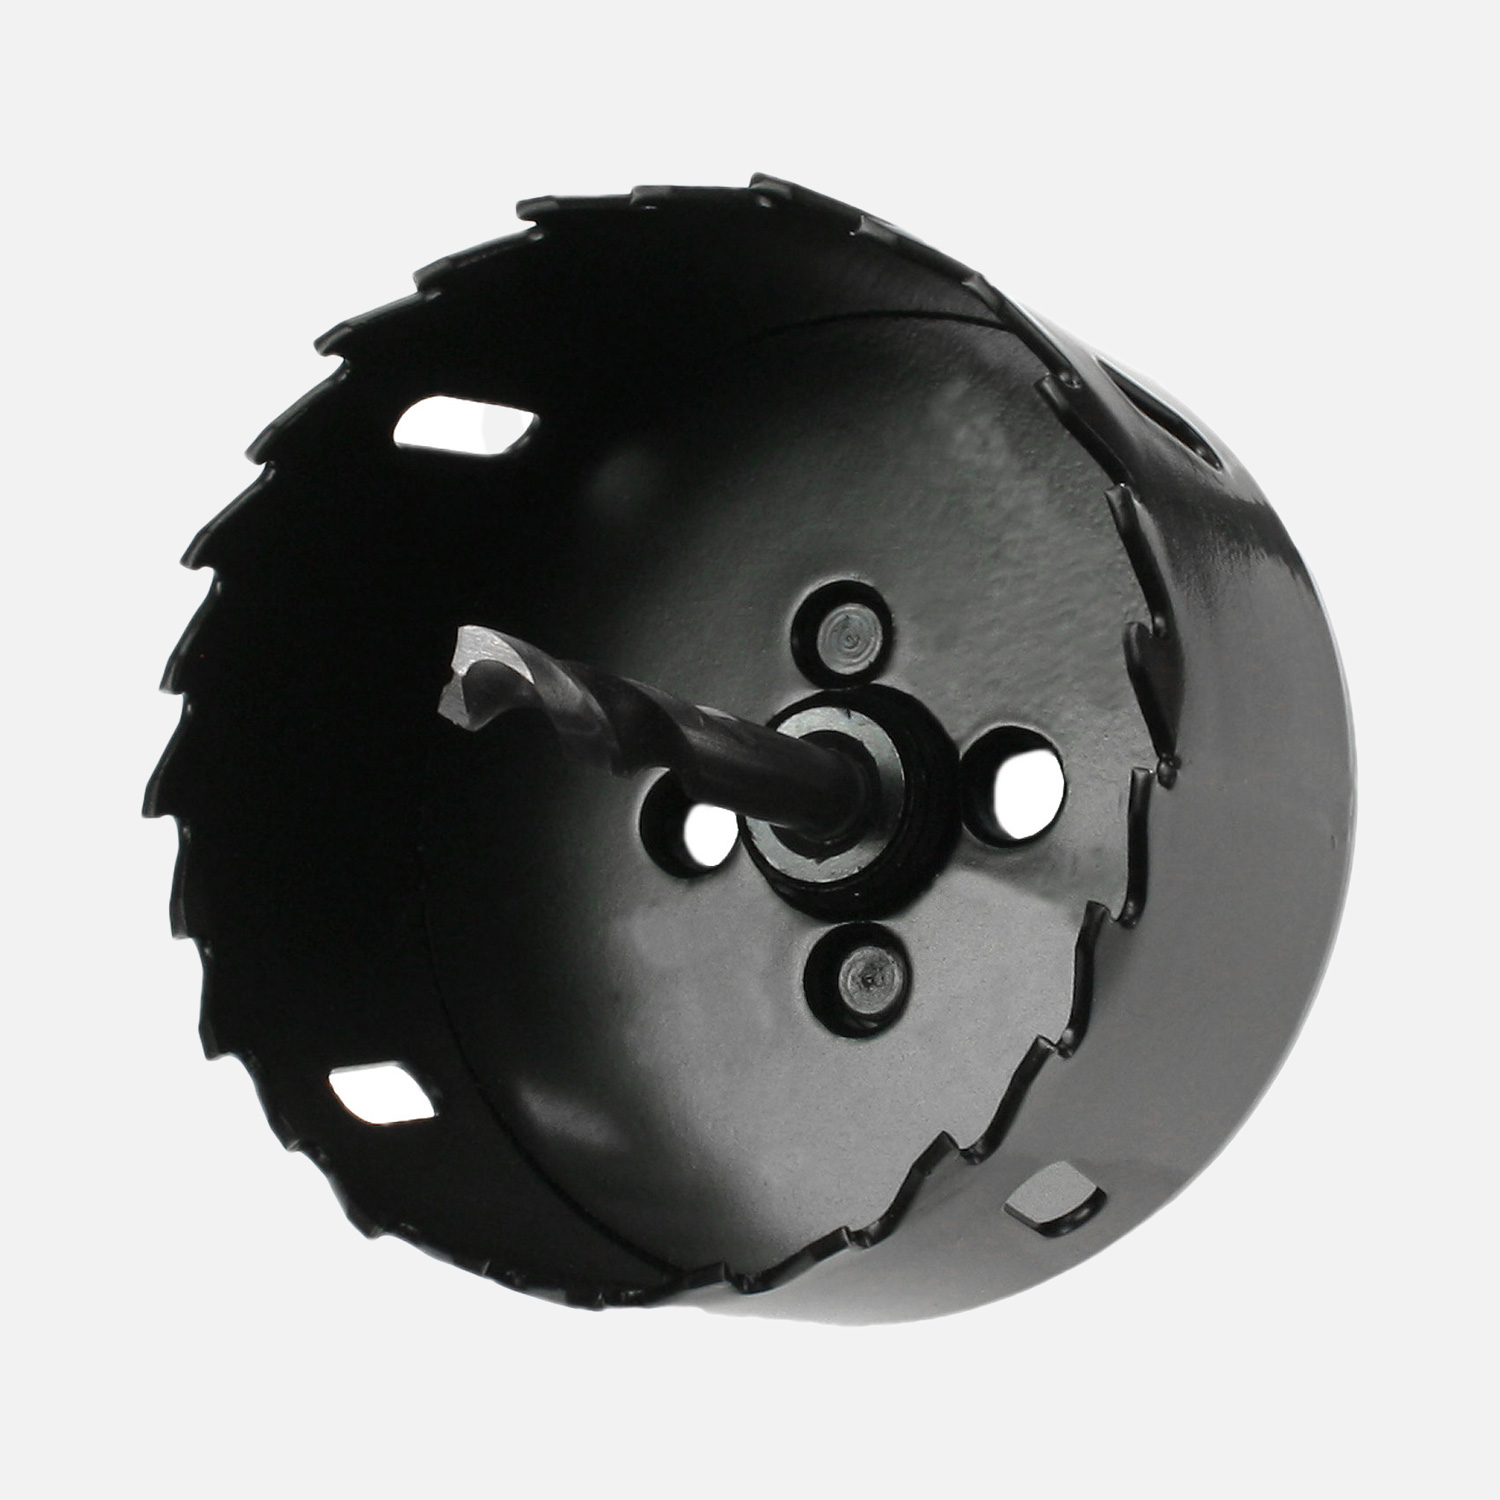 1 MPS Lochsäge - 67 mm Ø - Hartmetall - für Gipskarton & Holz geeignet